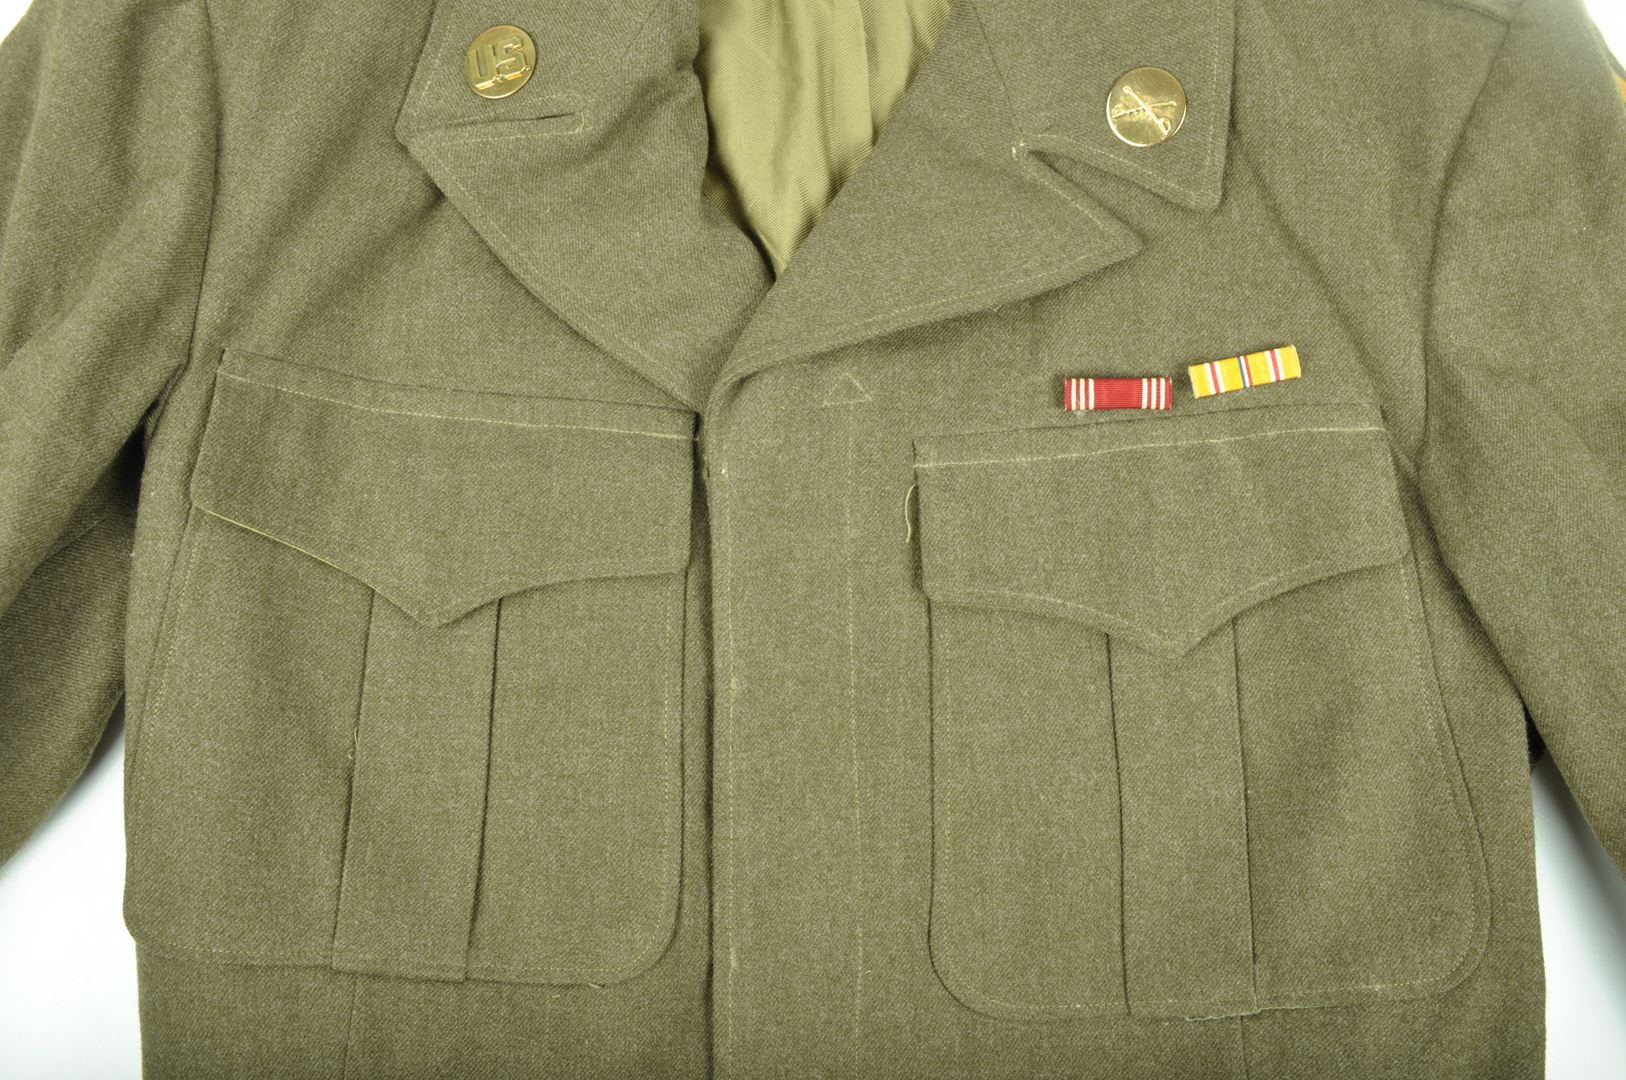 Blouson Ike daté 1944 / 4th Armored Division